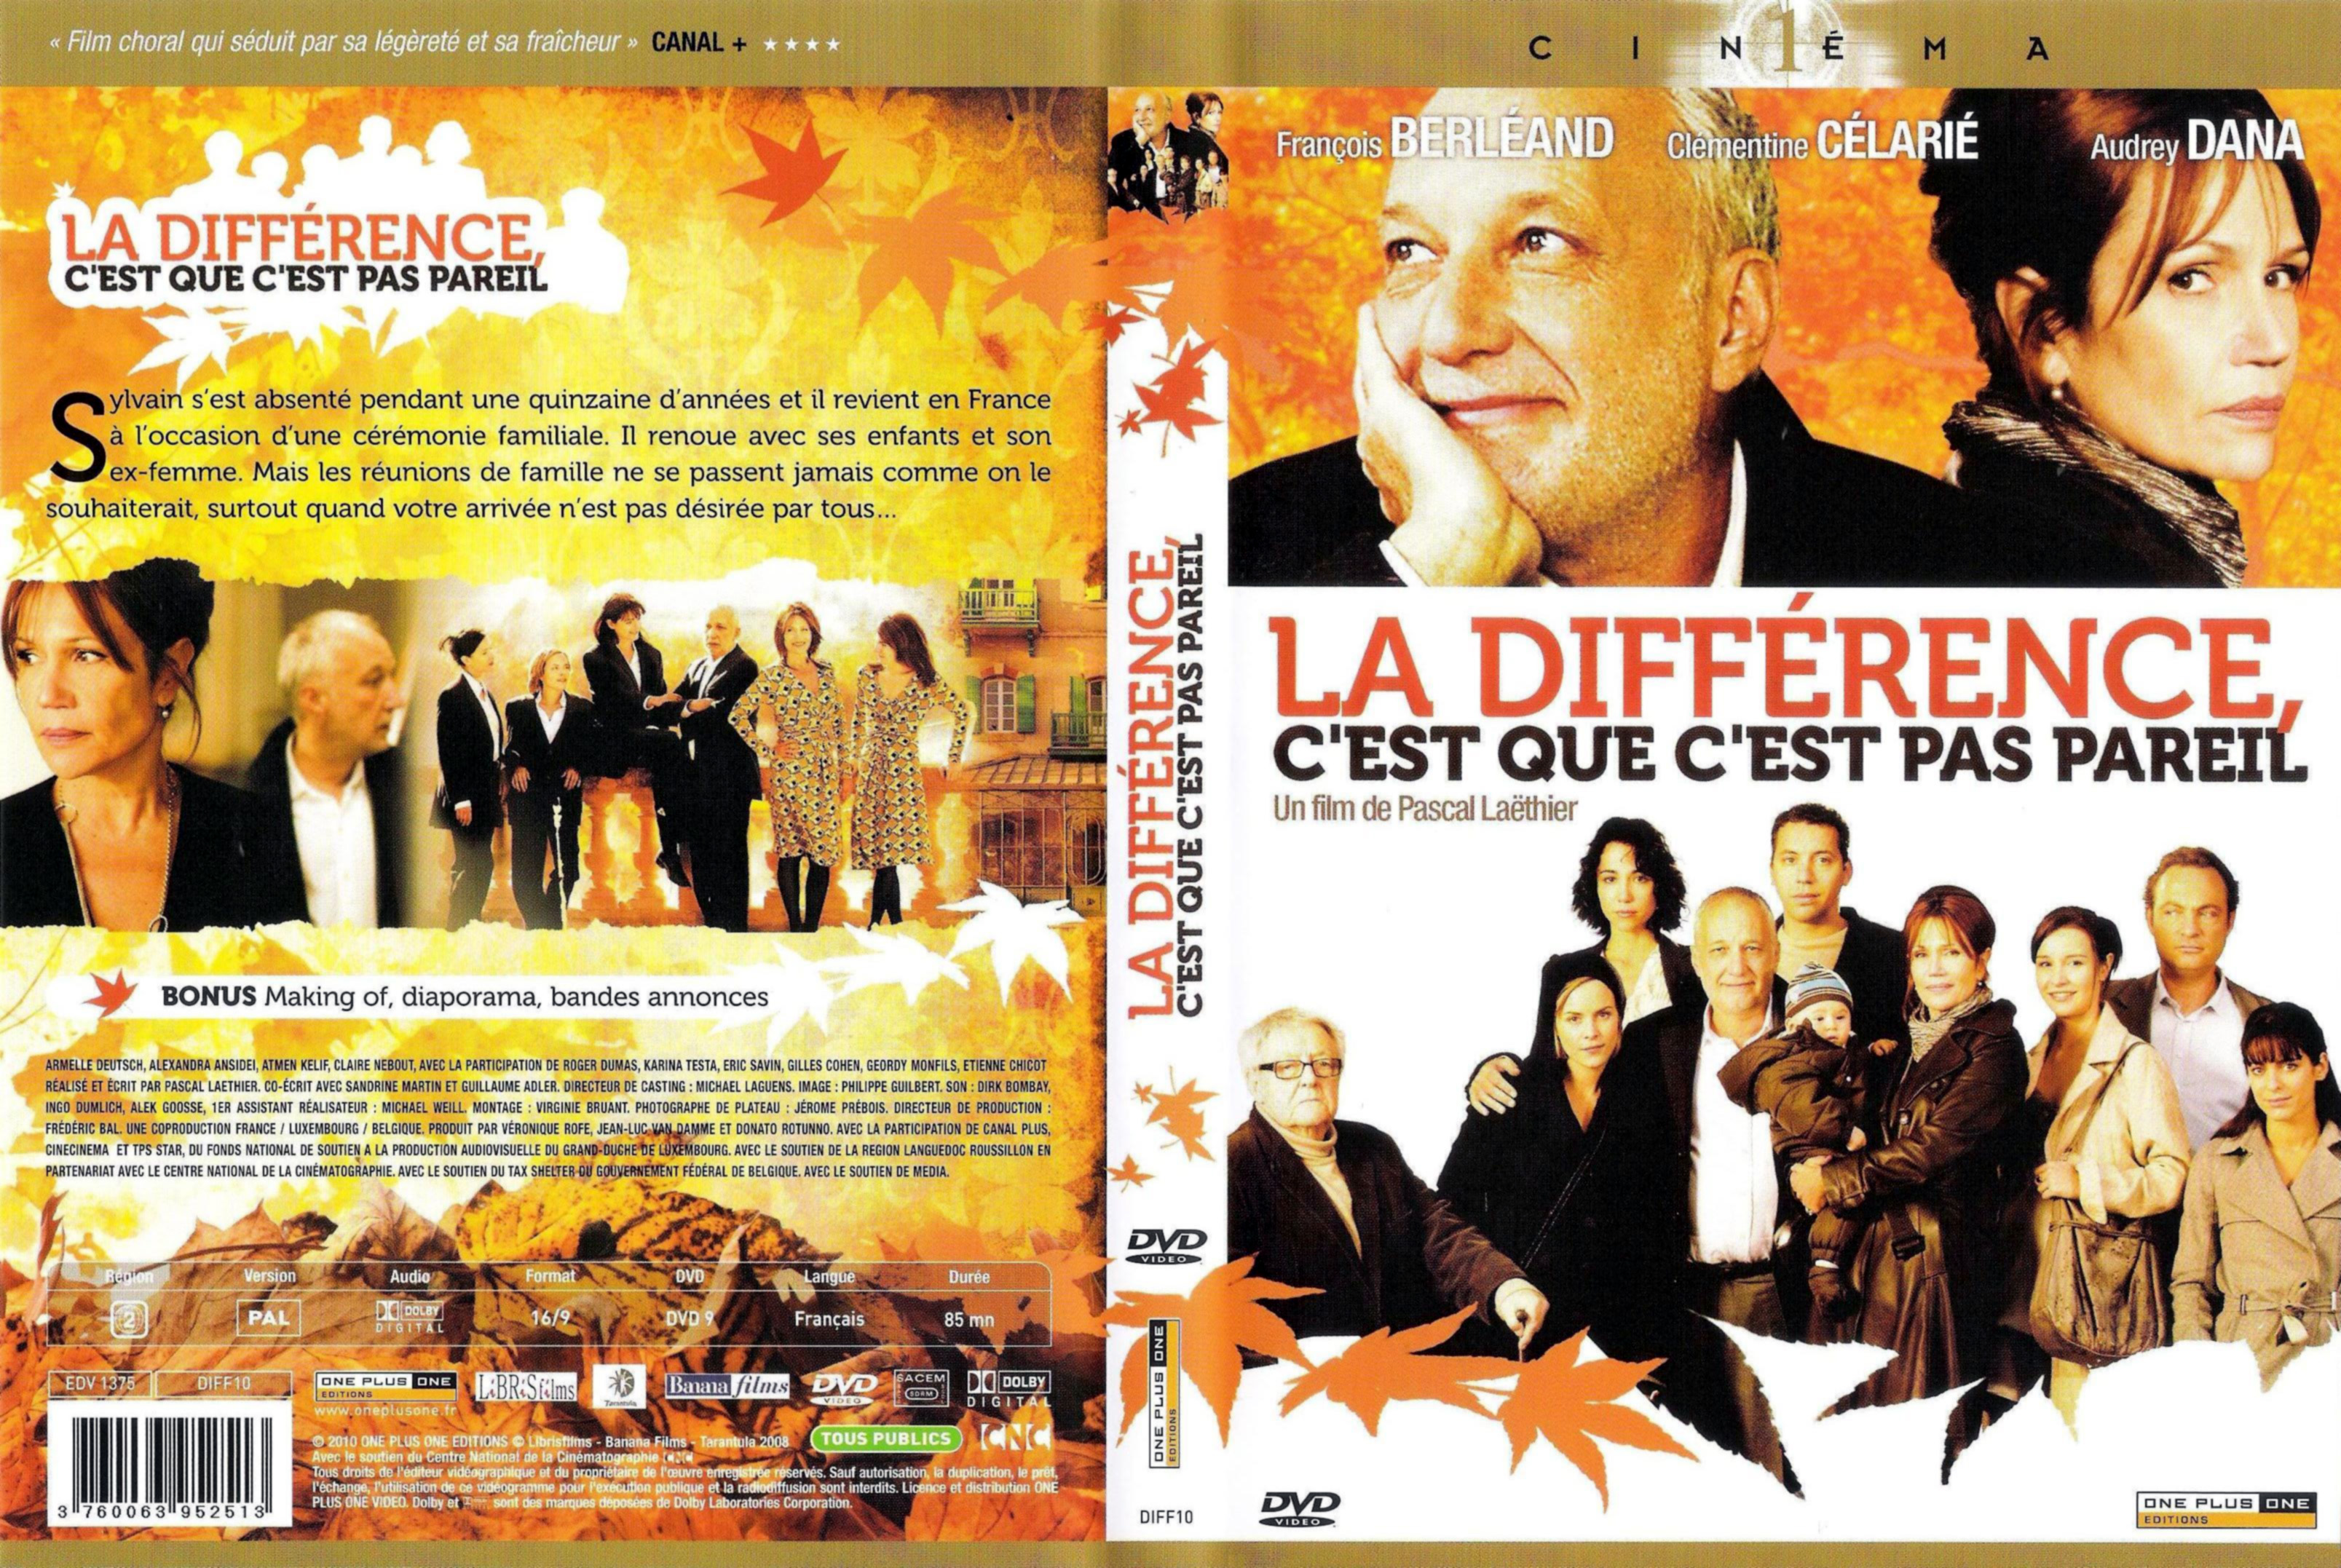 Jaquette DVD La difference c